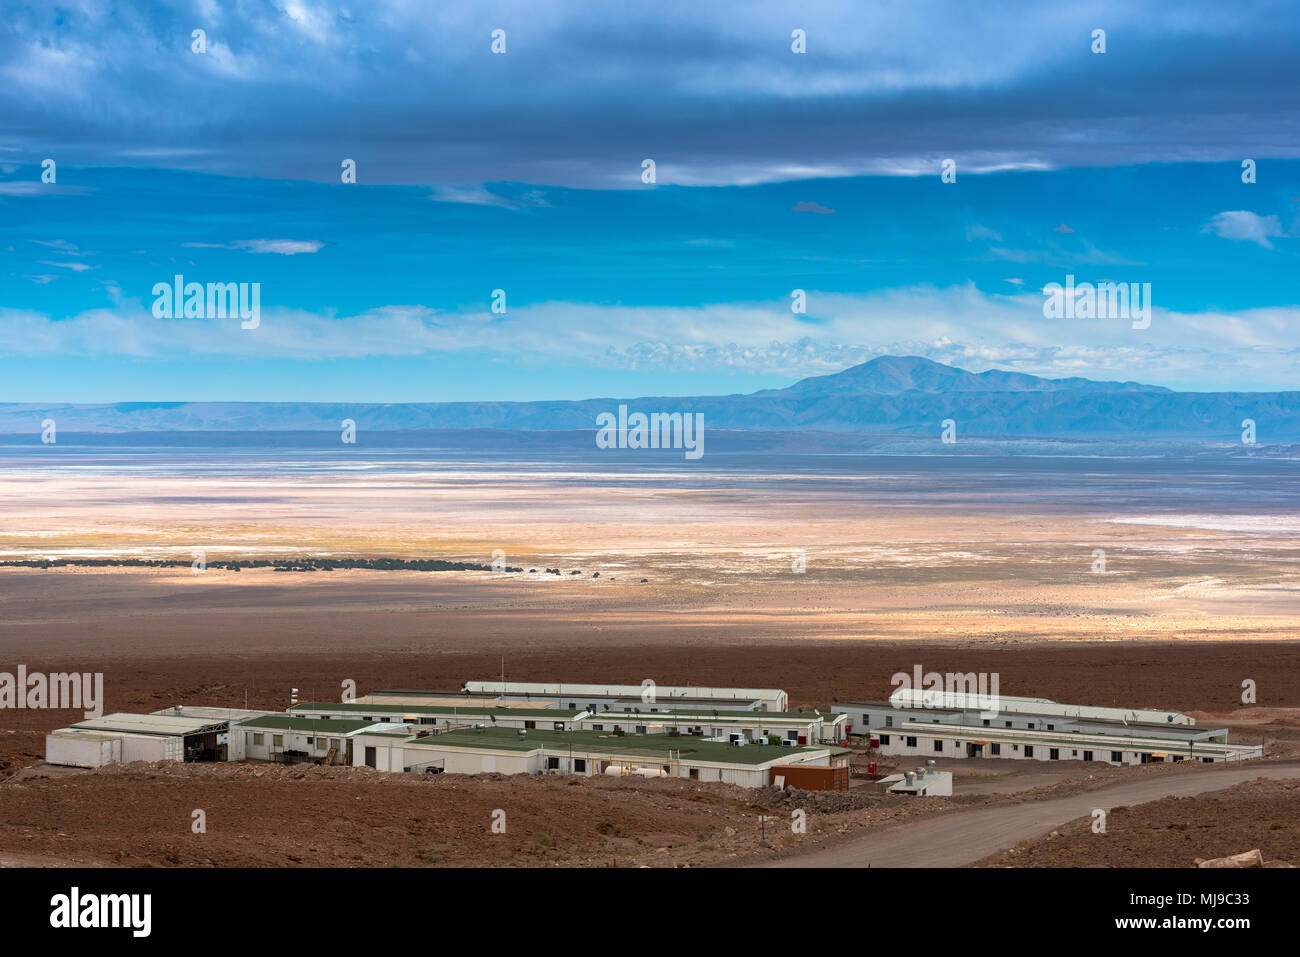 San Pedro de Atacama, Atacama-wüste, ALMA Base Camp, Chile - Teil von ALMA Base Camp Infrastruktur und Blick auf die Atacama Salt Lake (S Stockfoto